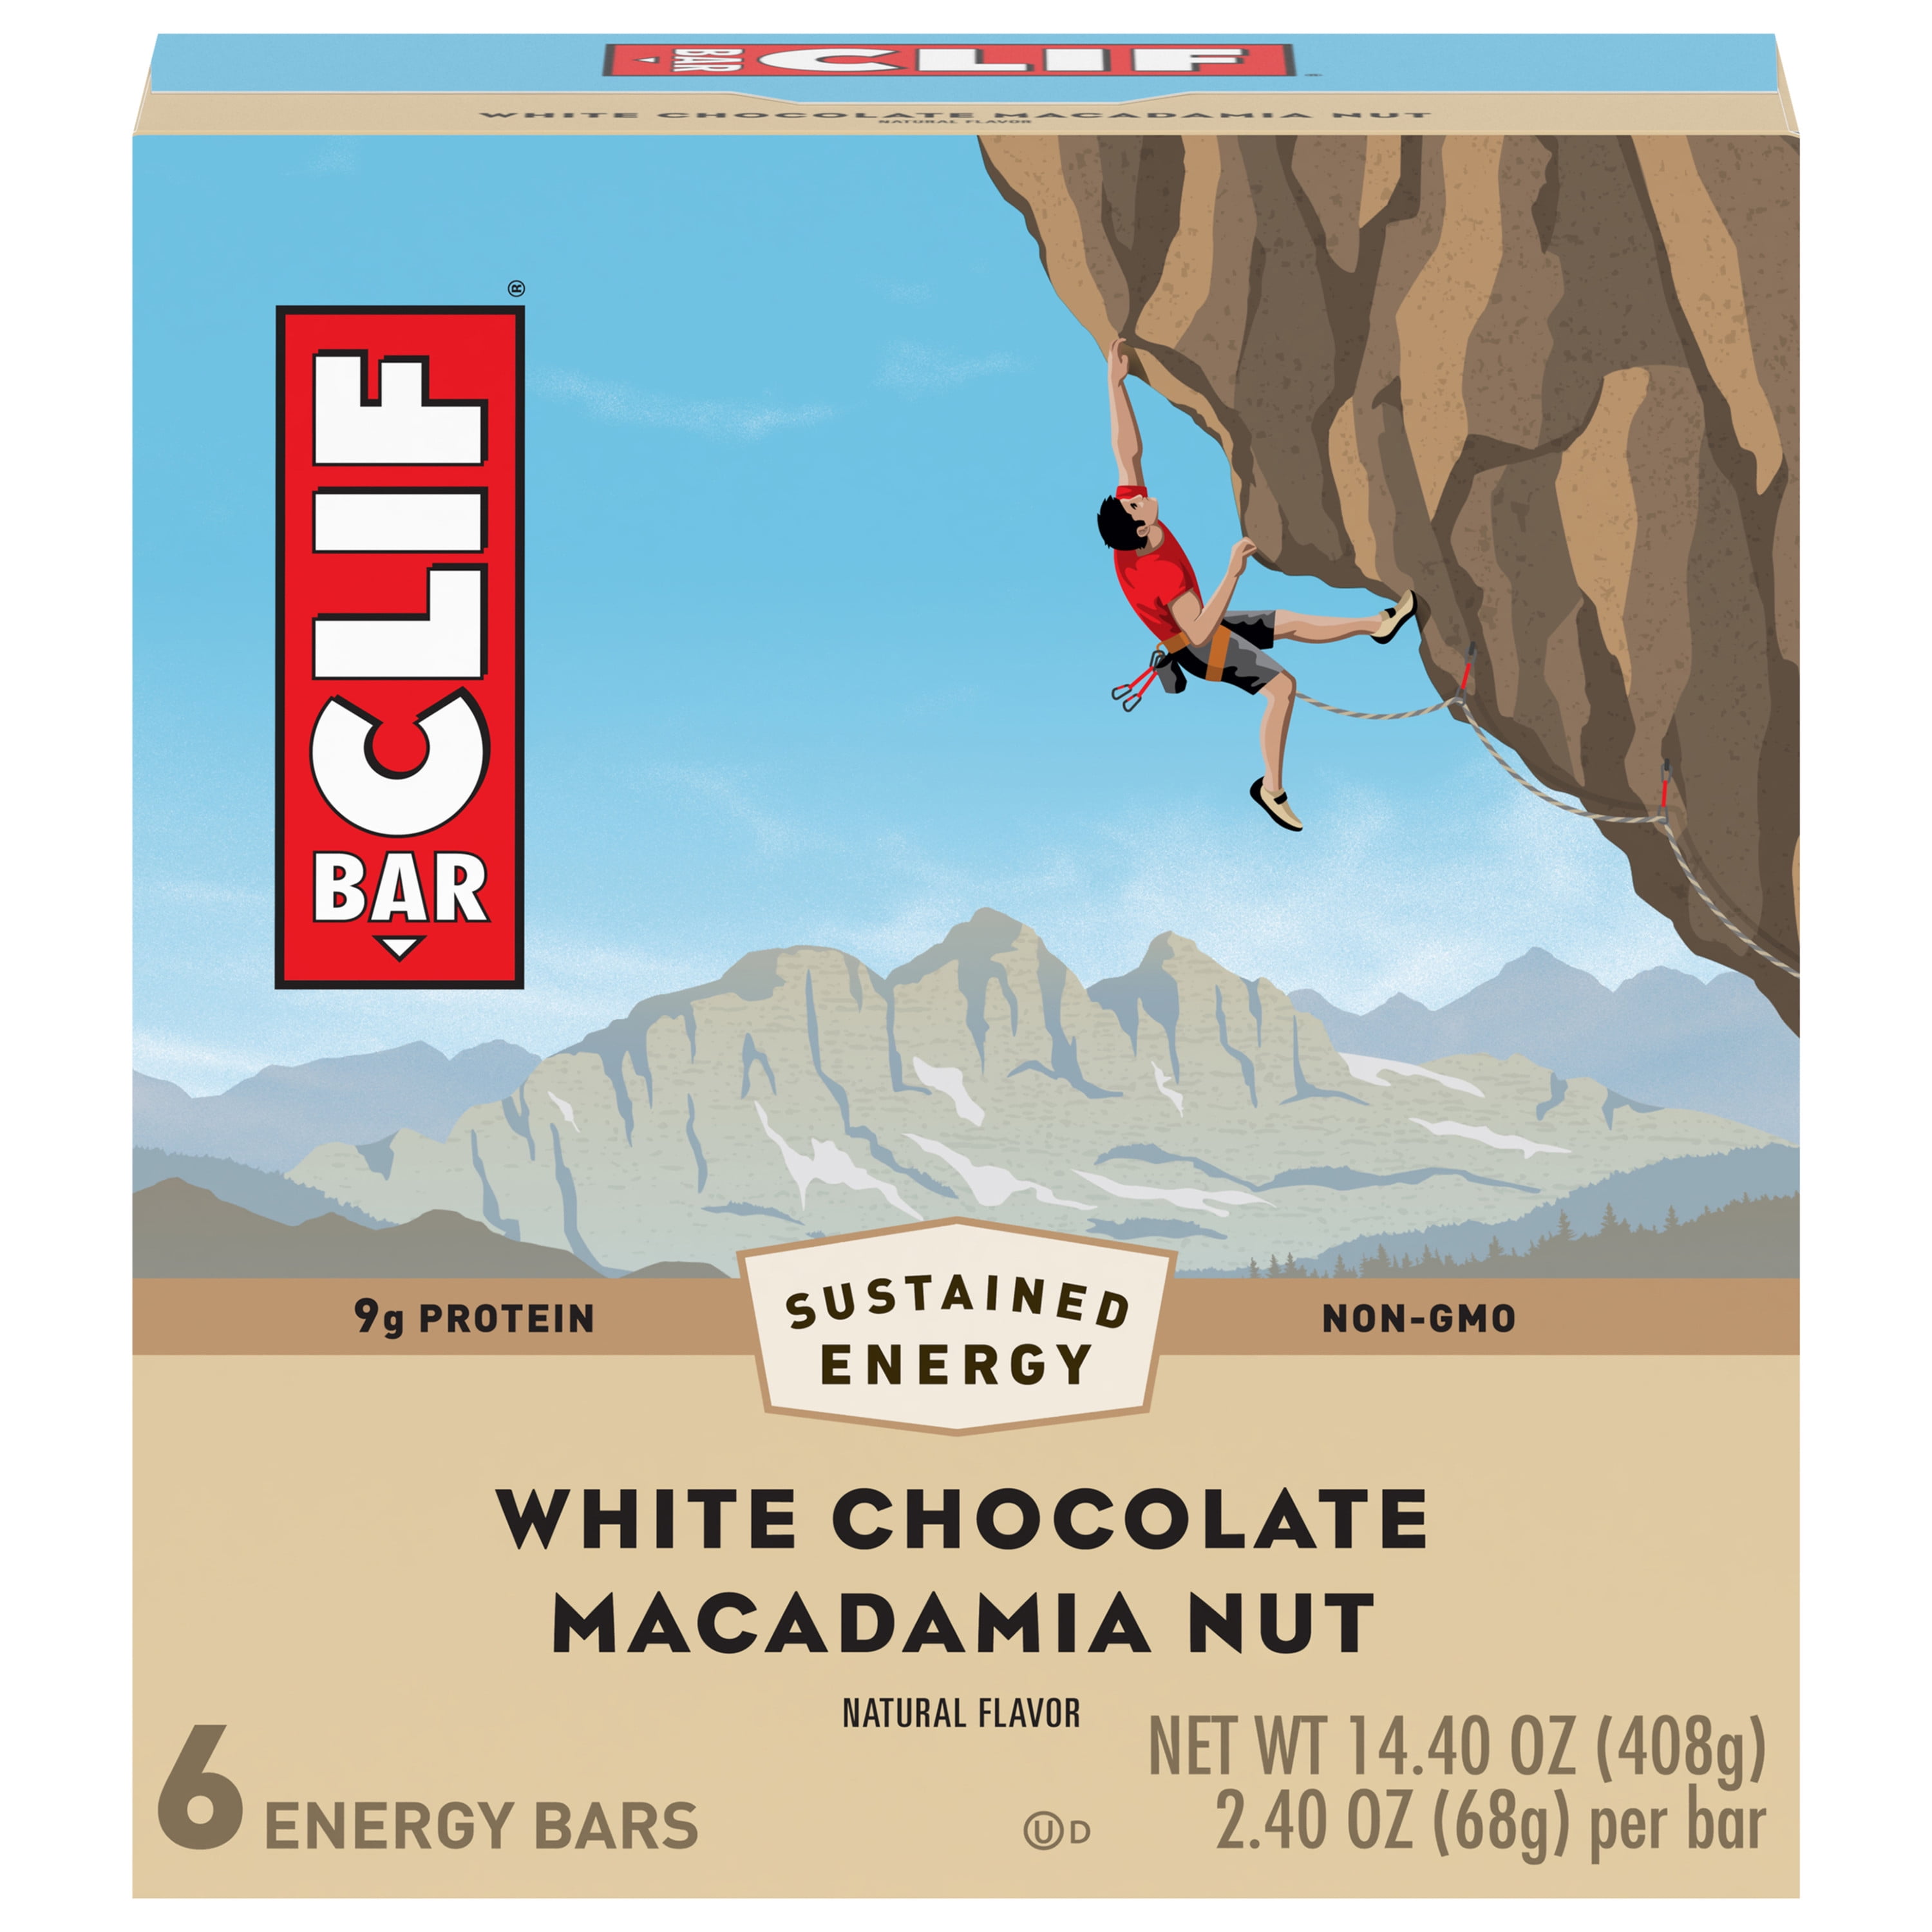 CLIF BAR Energy Bars, White Chocolate Macadamia Nut, 9g Protein Bar, 6 Ct, 2.4 oz